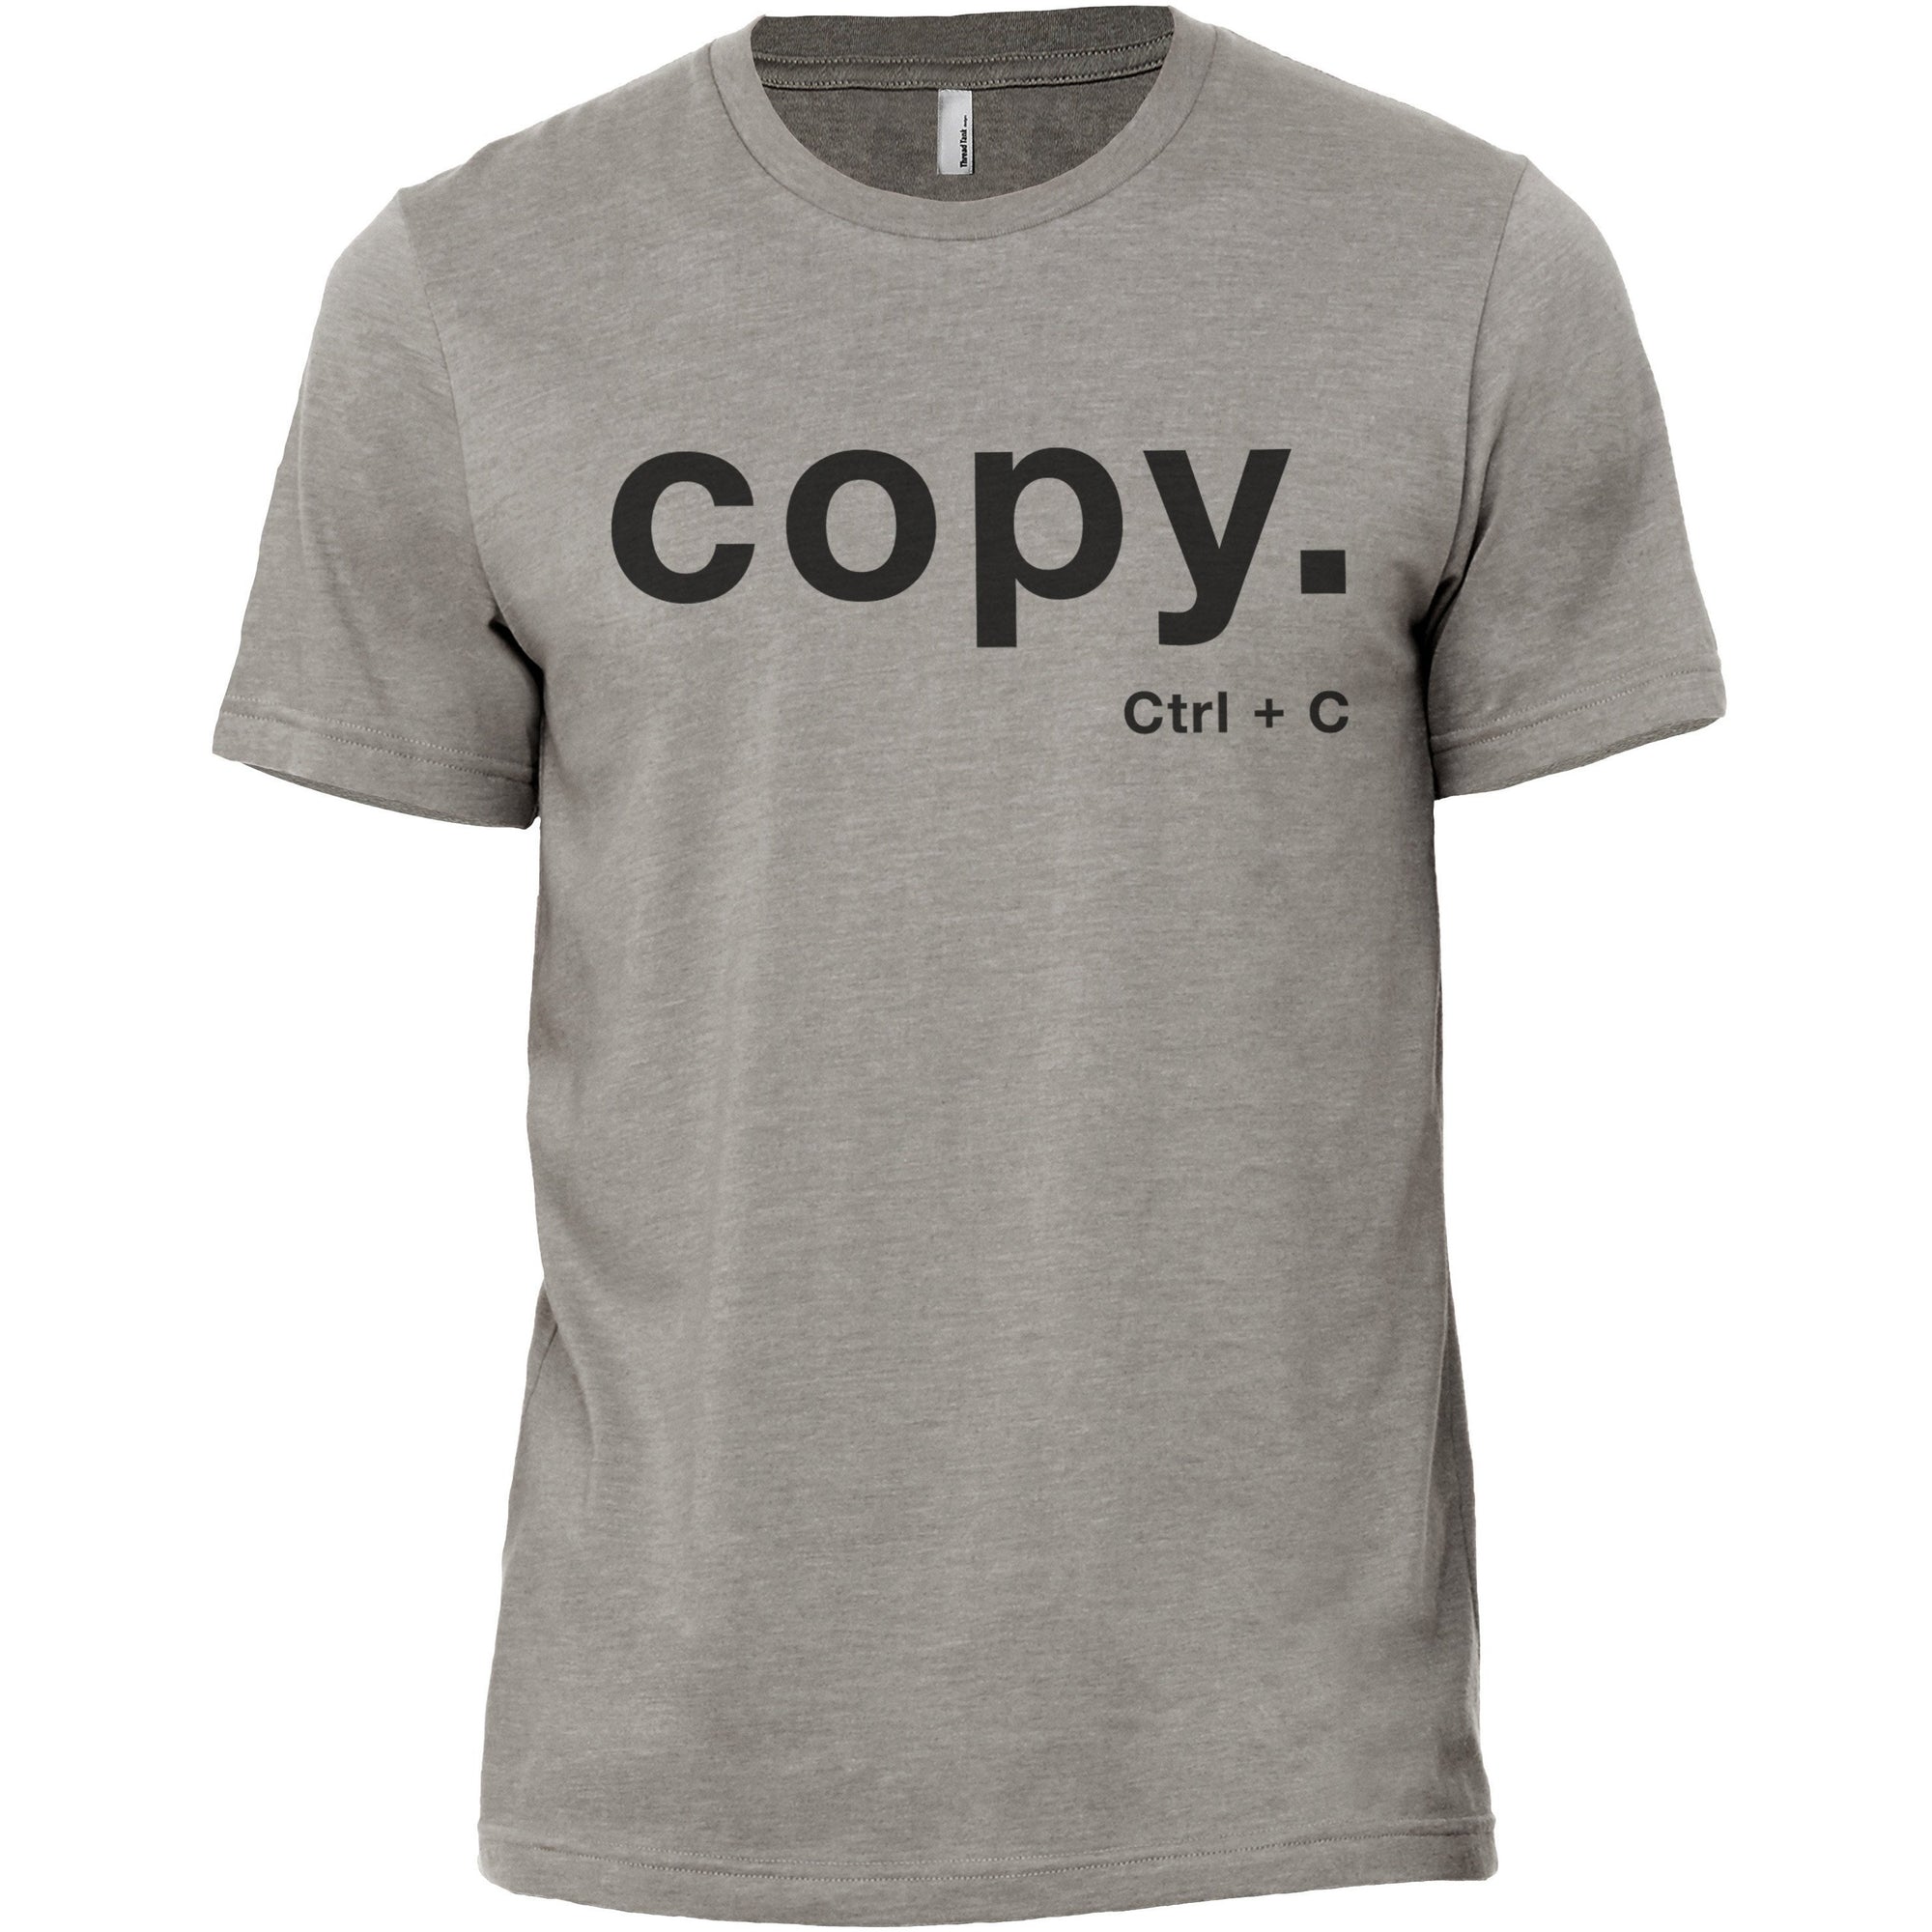 Copy CTRL C Military Grey Printed Graphic Men's Crew T-Shirt Tee